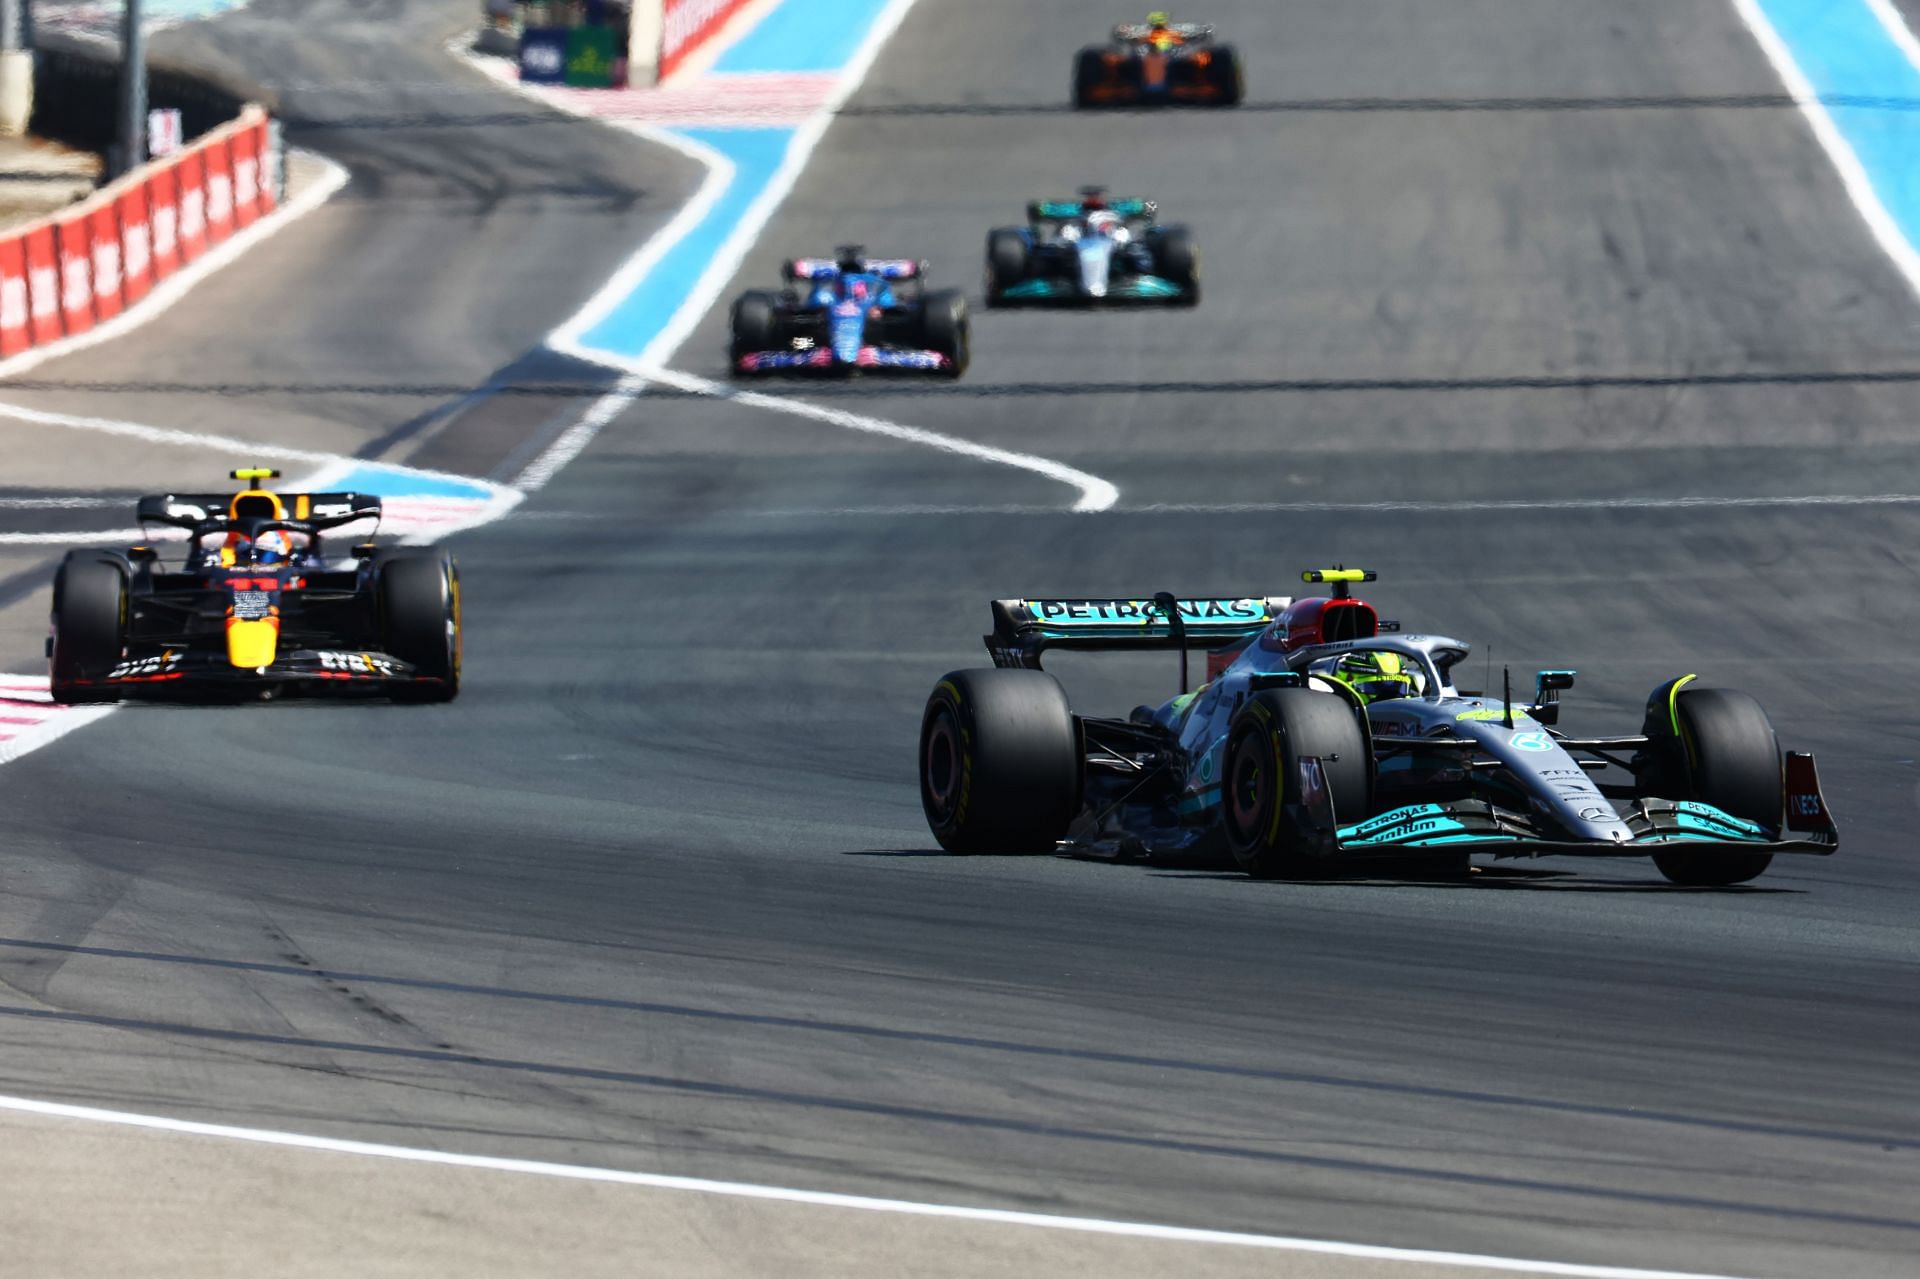 F1 Grand Prix of France - Circuit Paul Ricard